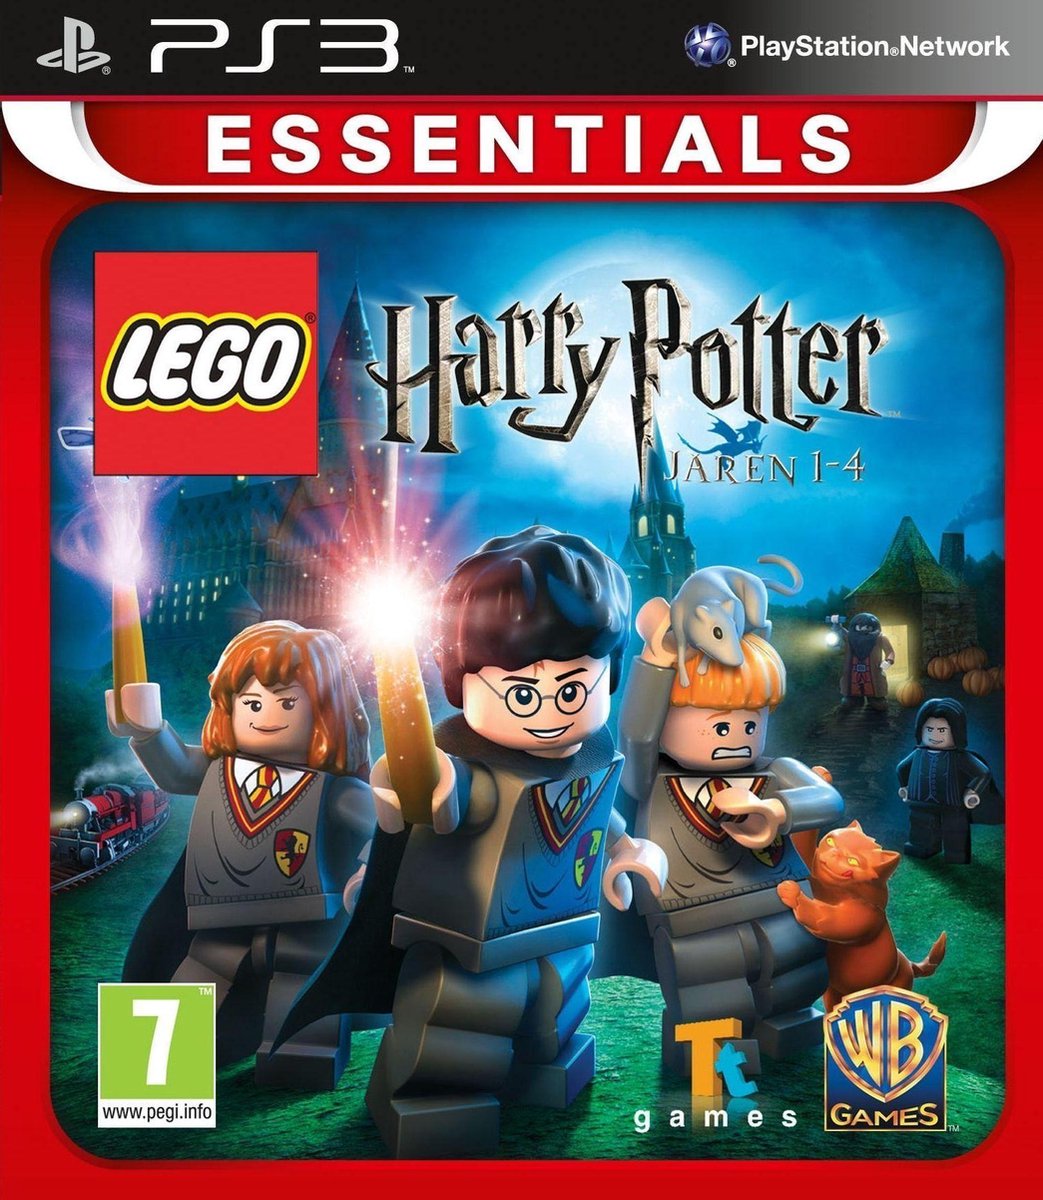 Lego Harry Potter jaren 1-4 Gamesellers.nl